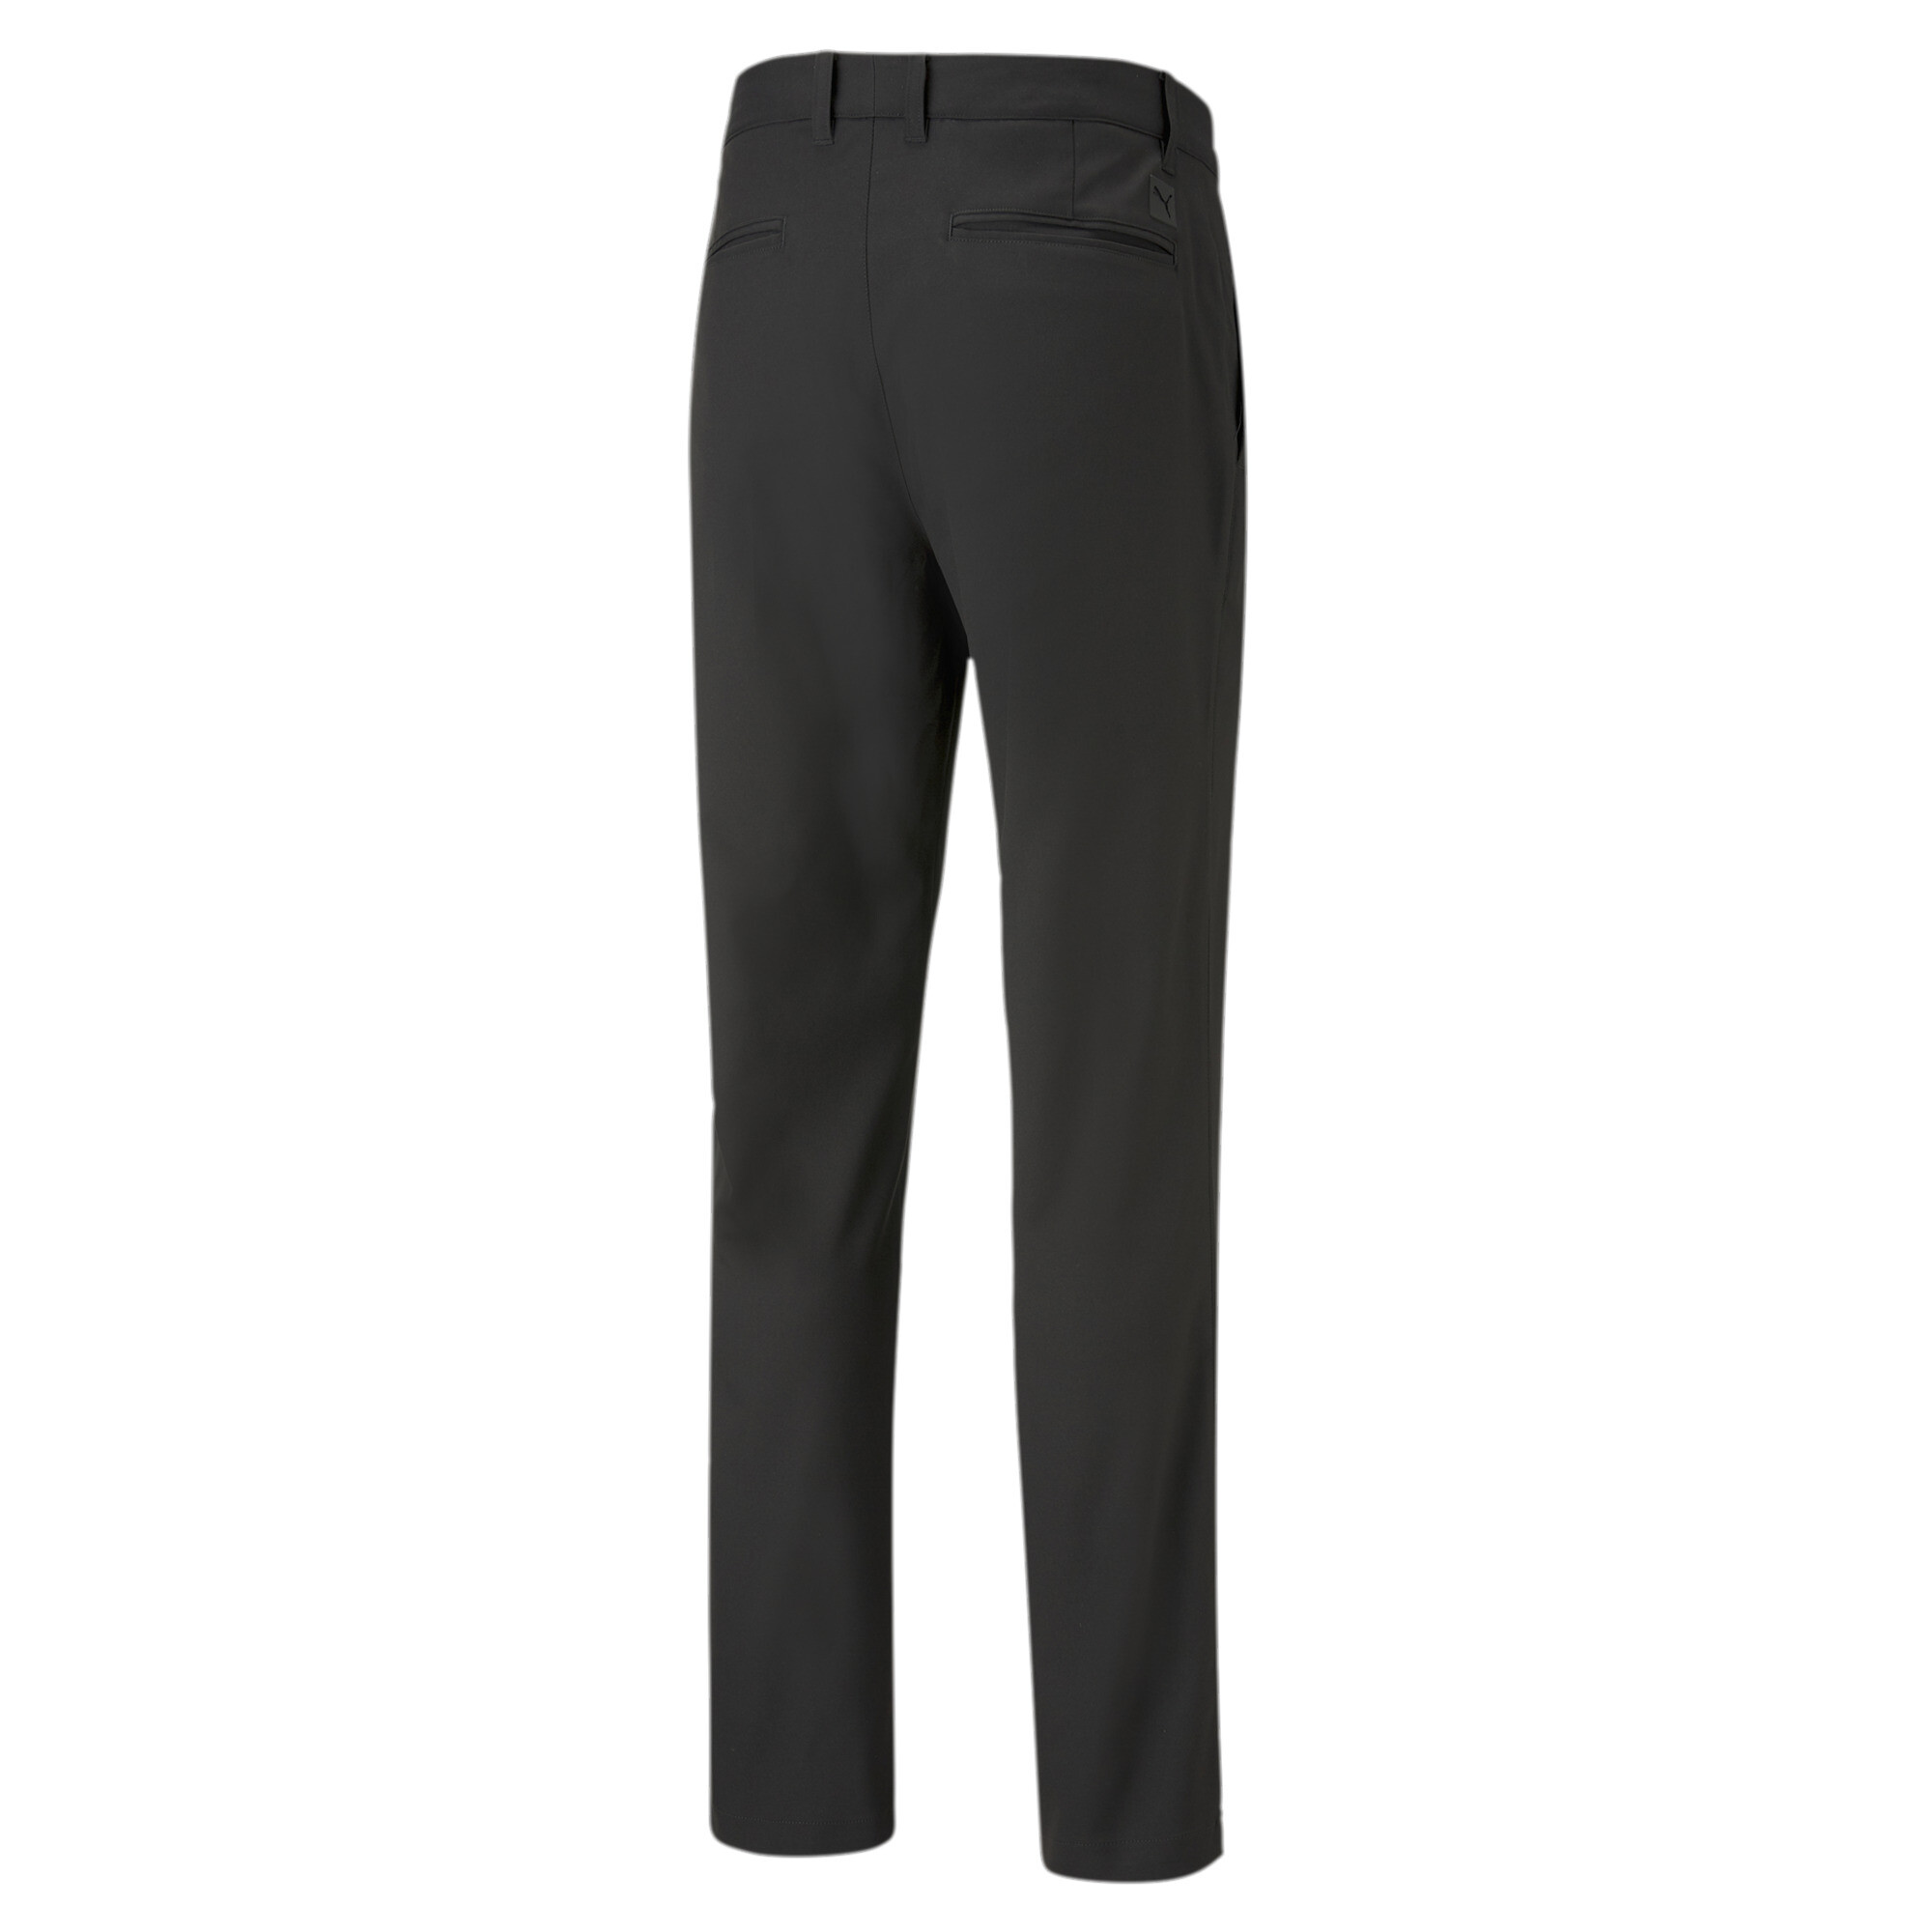 Men's Puma Dealer Golf Pants, Black, Size 32/36, Clothing